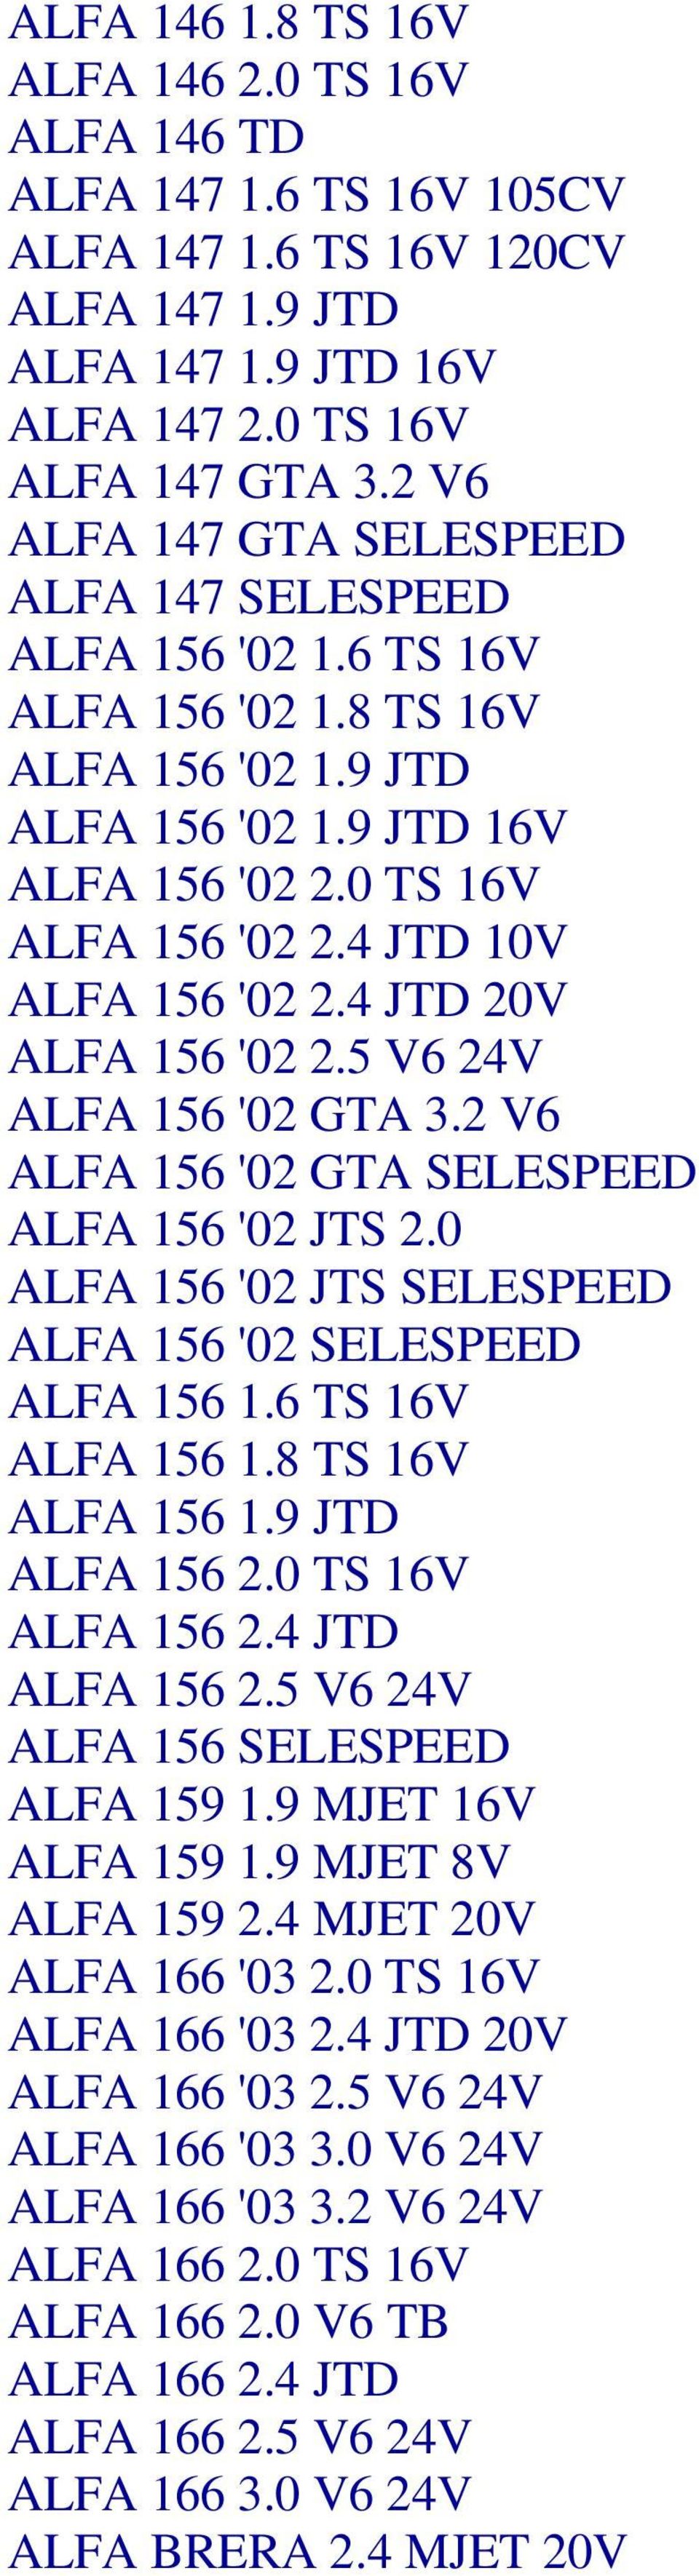 4 JTD 10V ALFA 156 '02 2.4 JTD 20V ALFA 156 '02 2.5 V6 24V ALFA 156 '02 GTA 3.2 V6 ALFA 156 '02 GTA SELESPEED ALFA 156 '02 JTS 2.0 ALFA 156 '02 JTS SELESPEED ALFA 156 '02 SELESPEED ALFA 156 1.